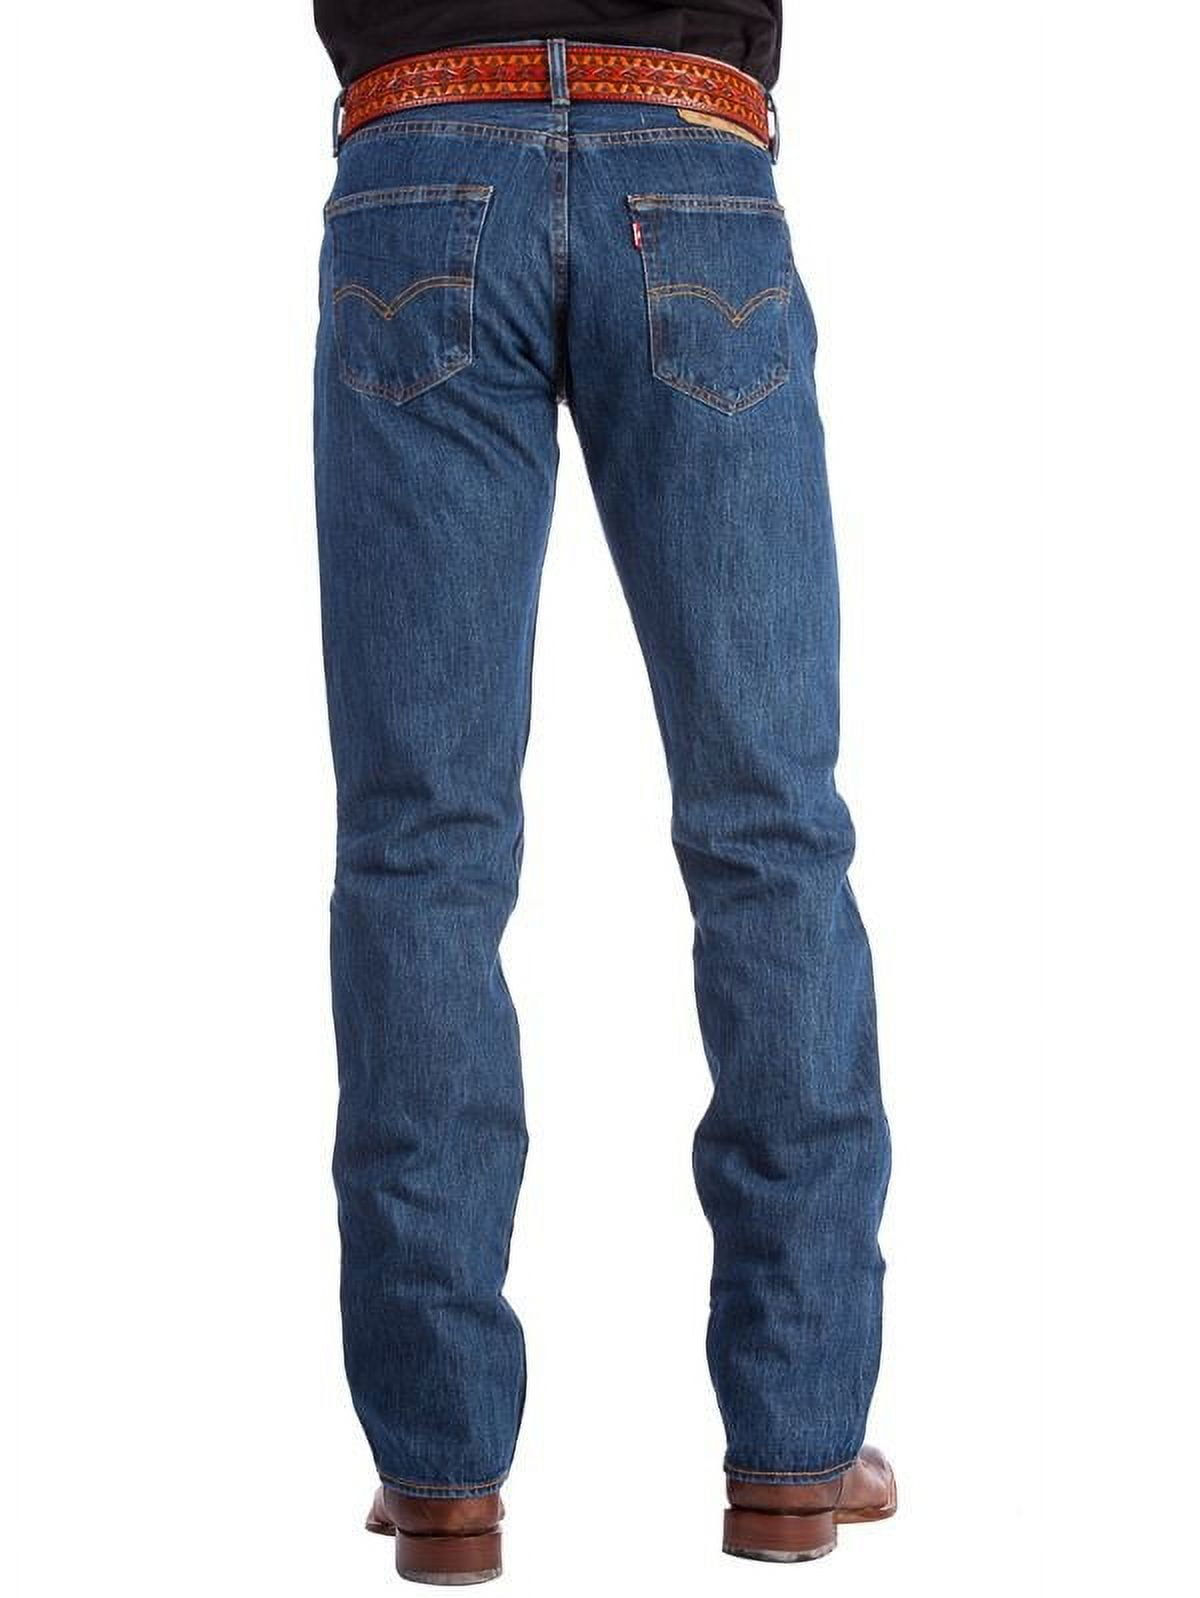 Levi Strauss Mens Original Fit 501 Jeans 28x32 Dark Stonewash 